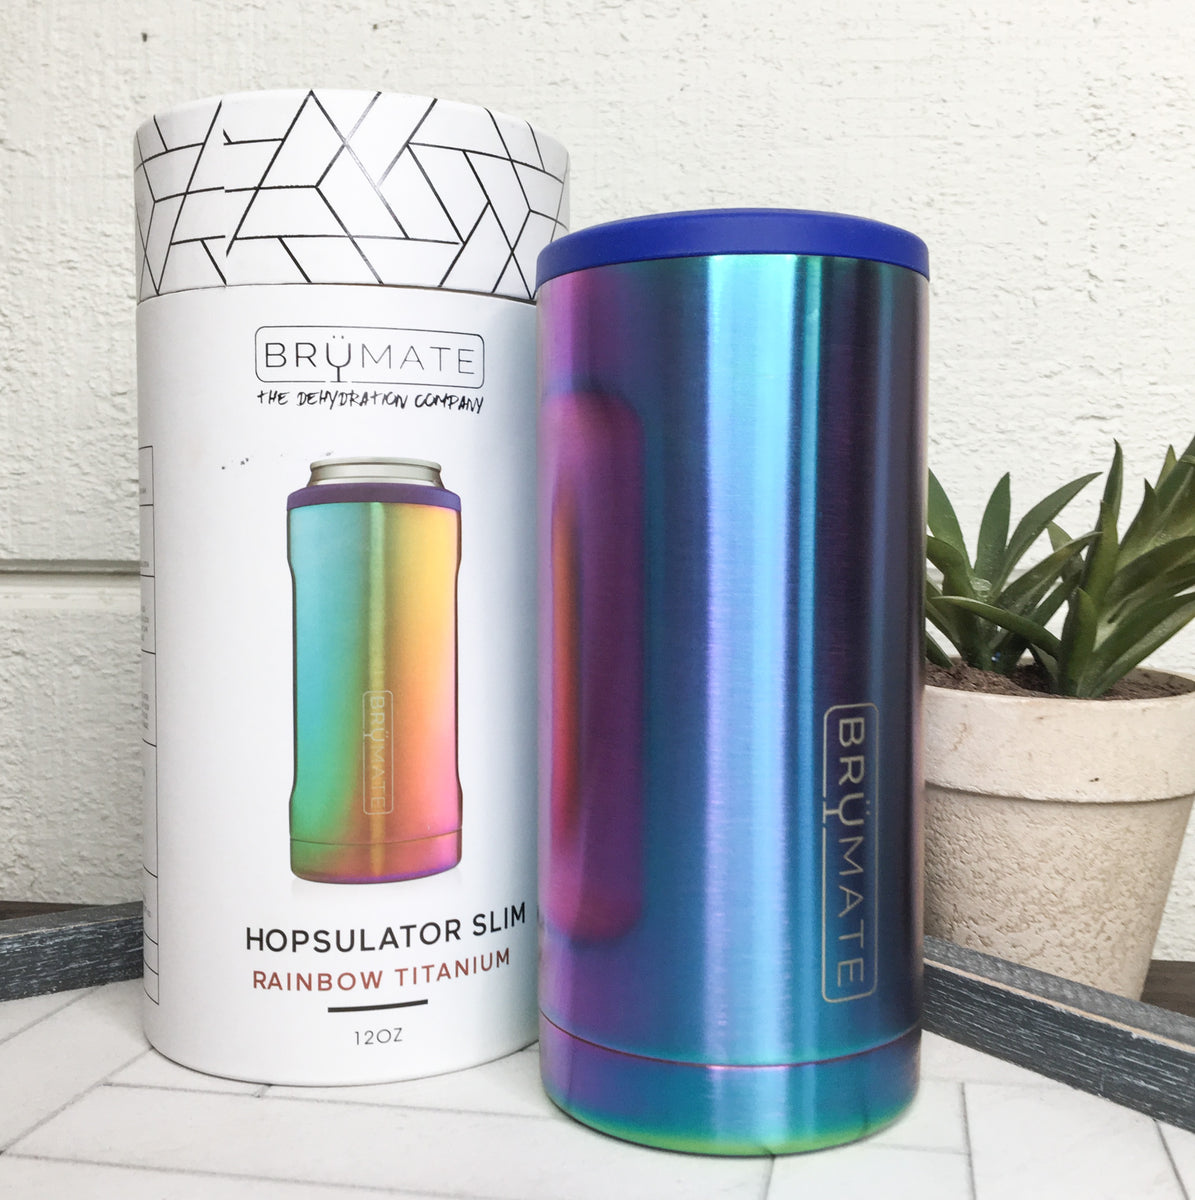 Brumate Hopsulator Slim Rainbow Titanium